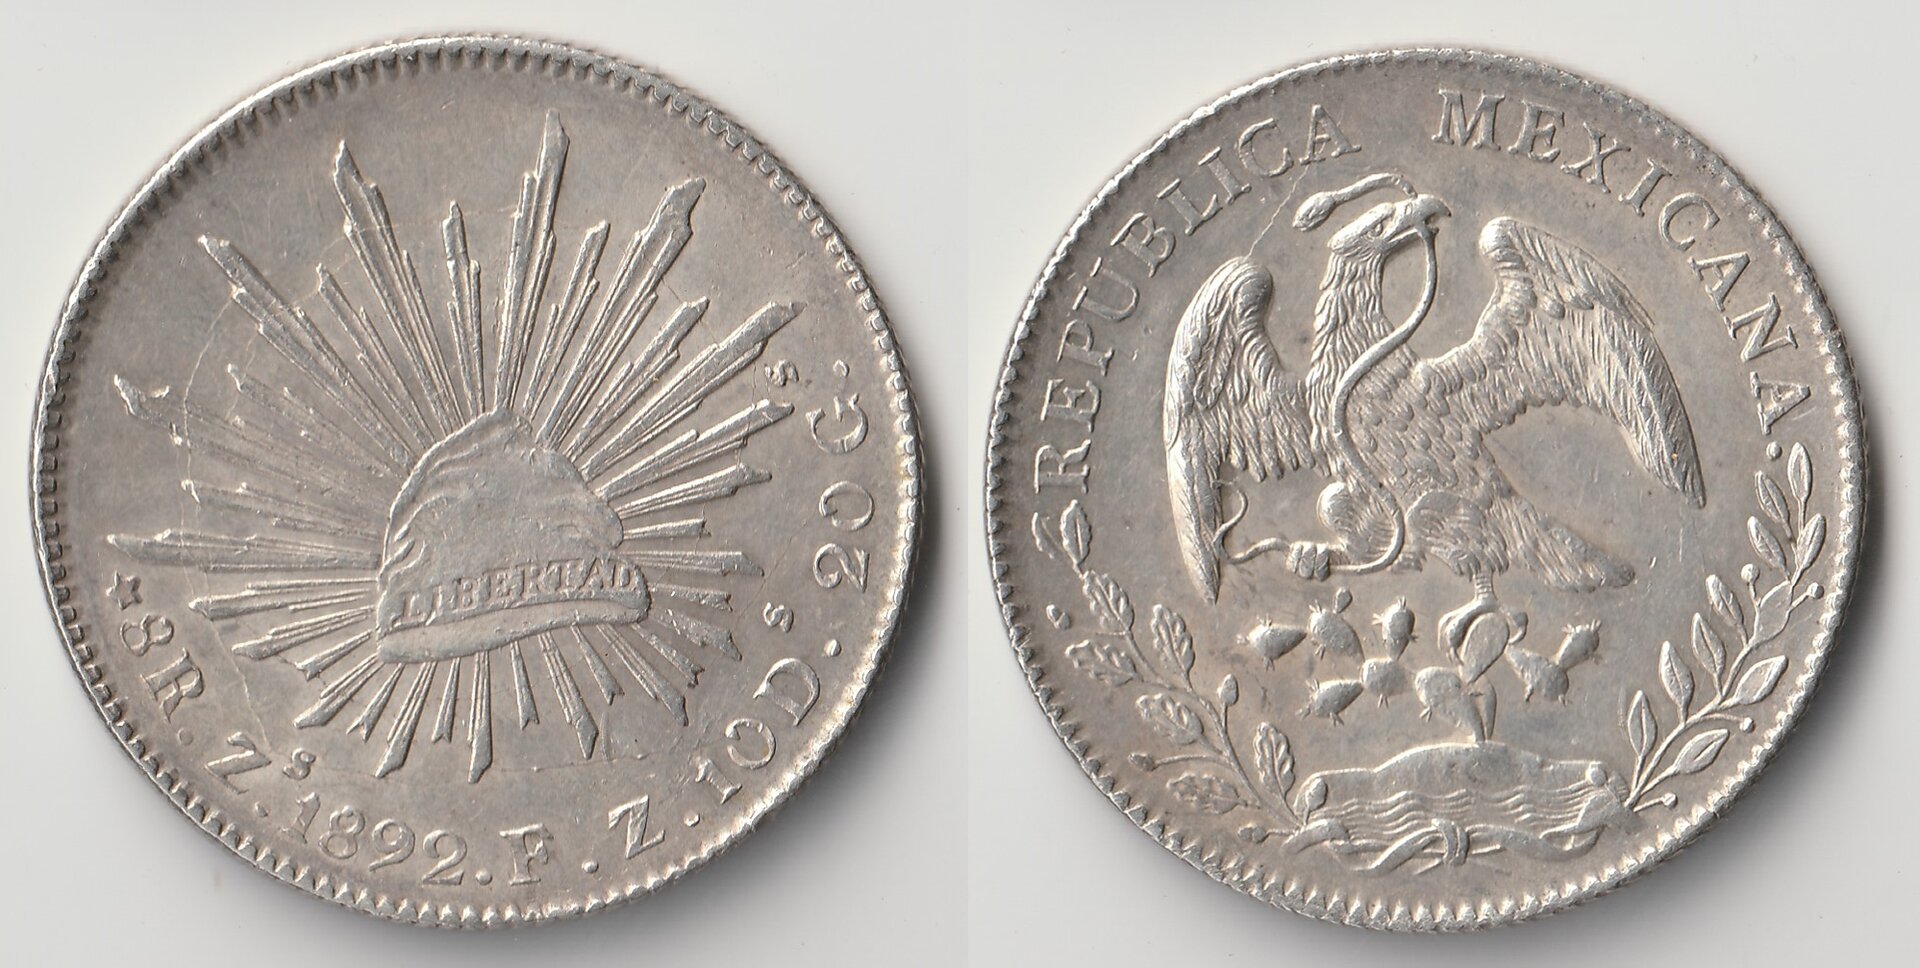 1892 zs mexico 8 reales.jpg